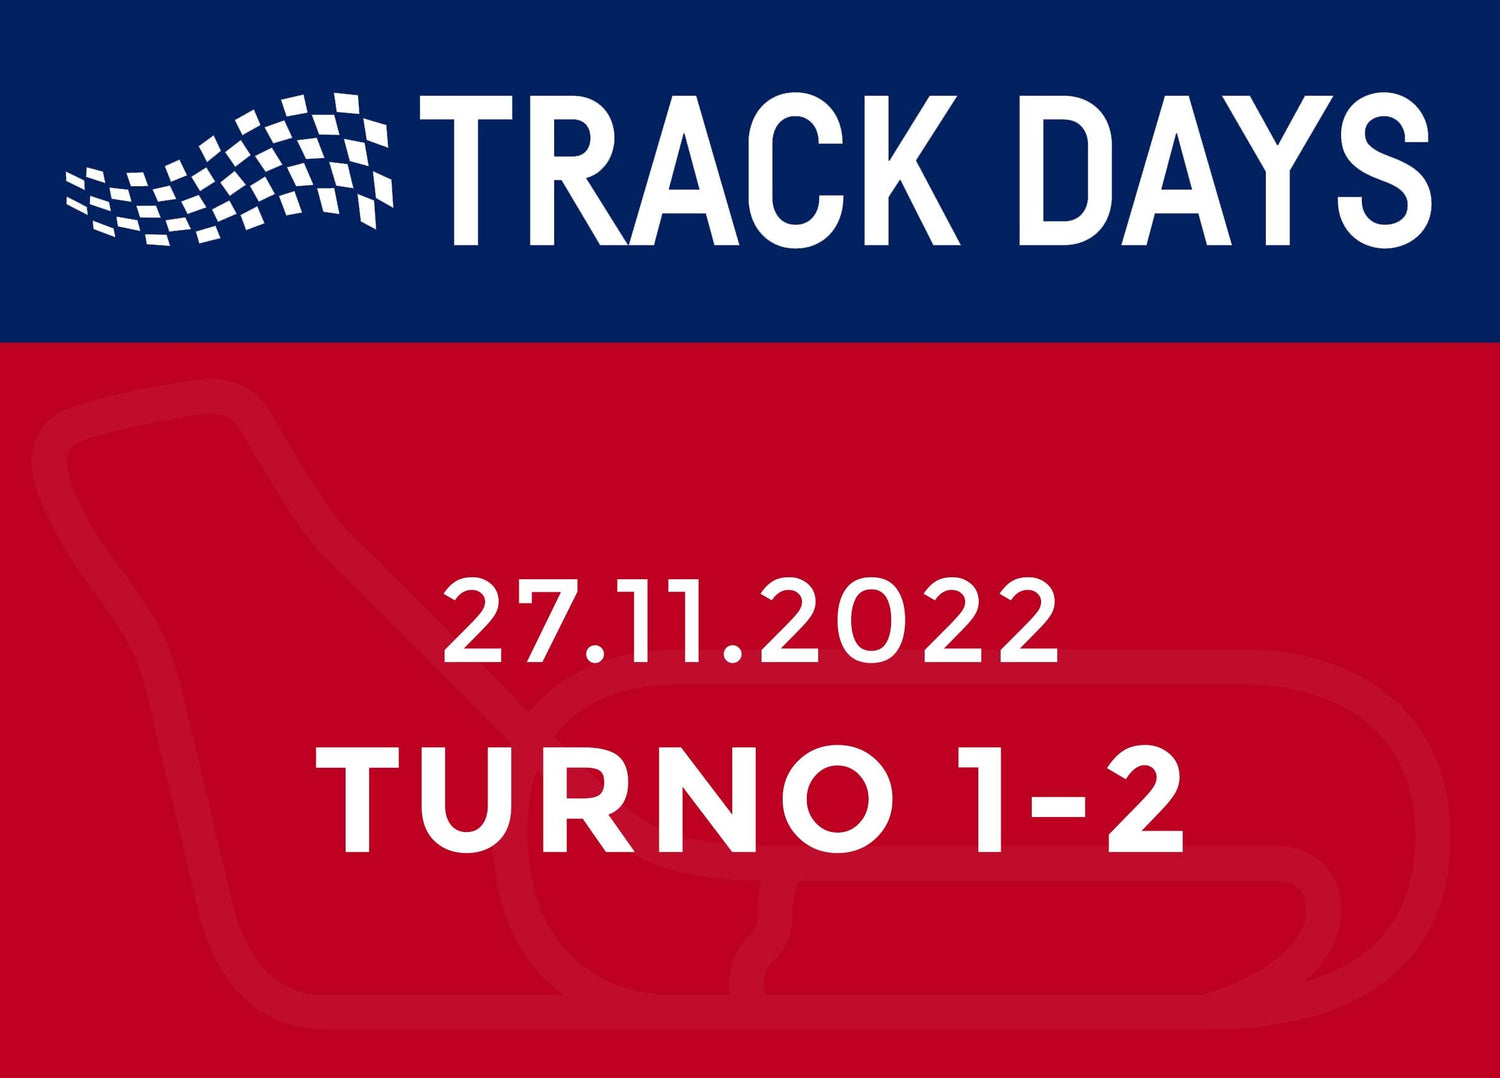 TRACK DAYS 27.11.22 TURNO 1-2